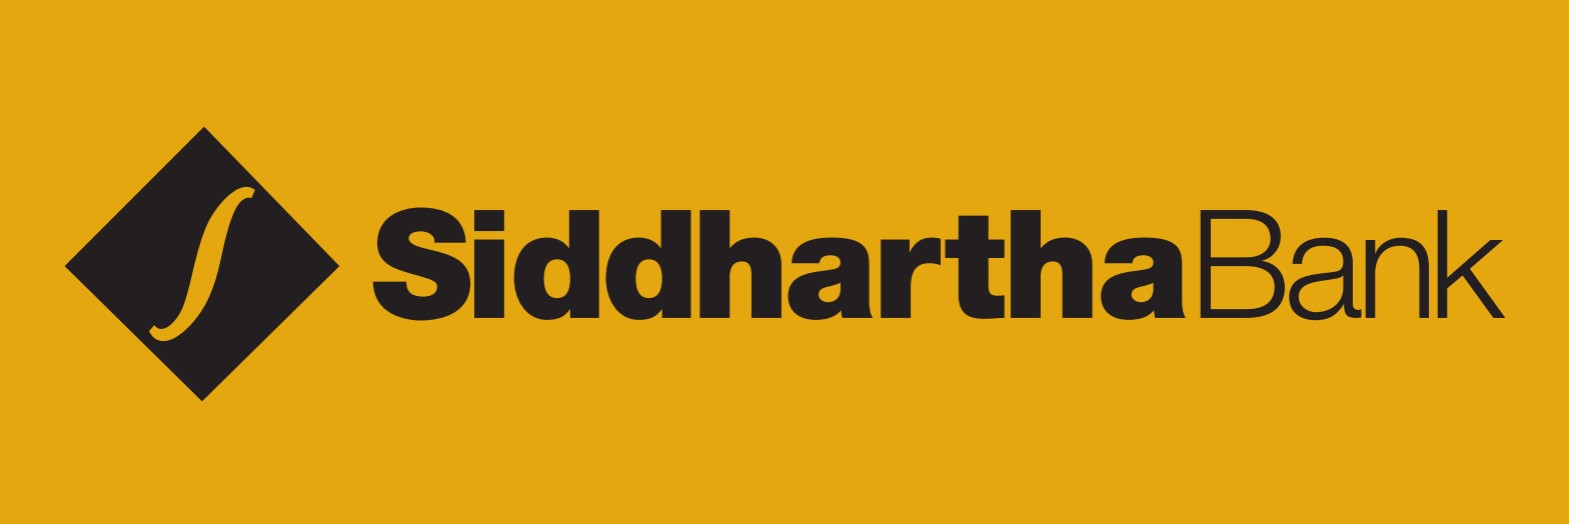 Siddhartha Bank Limited